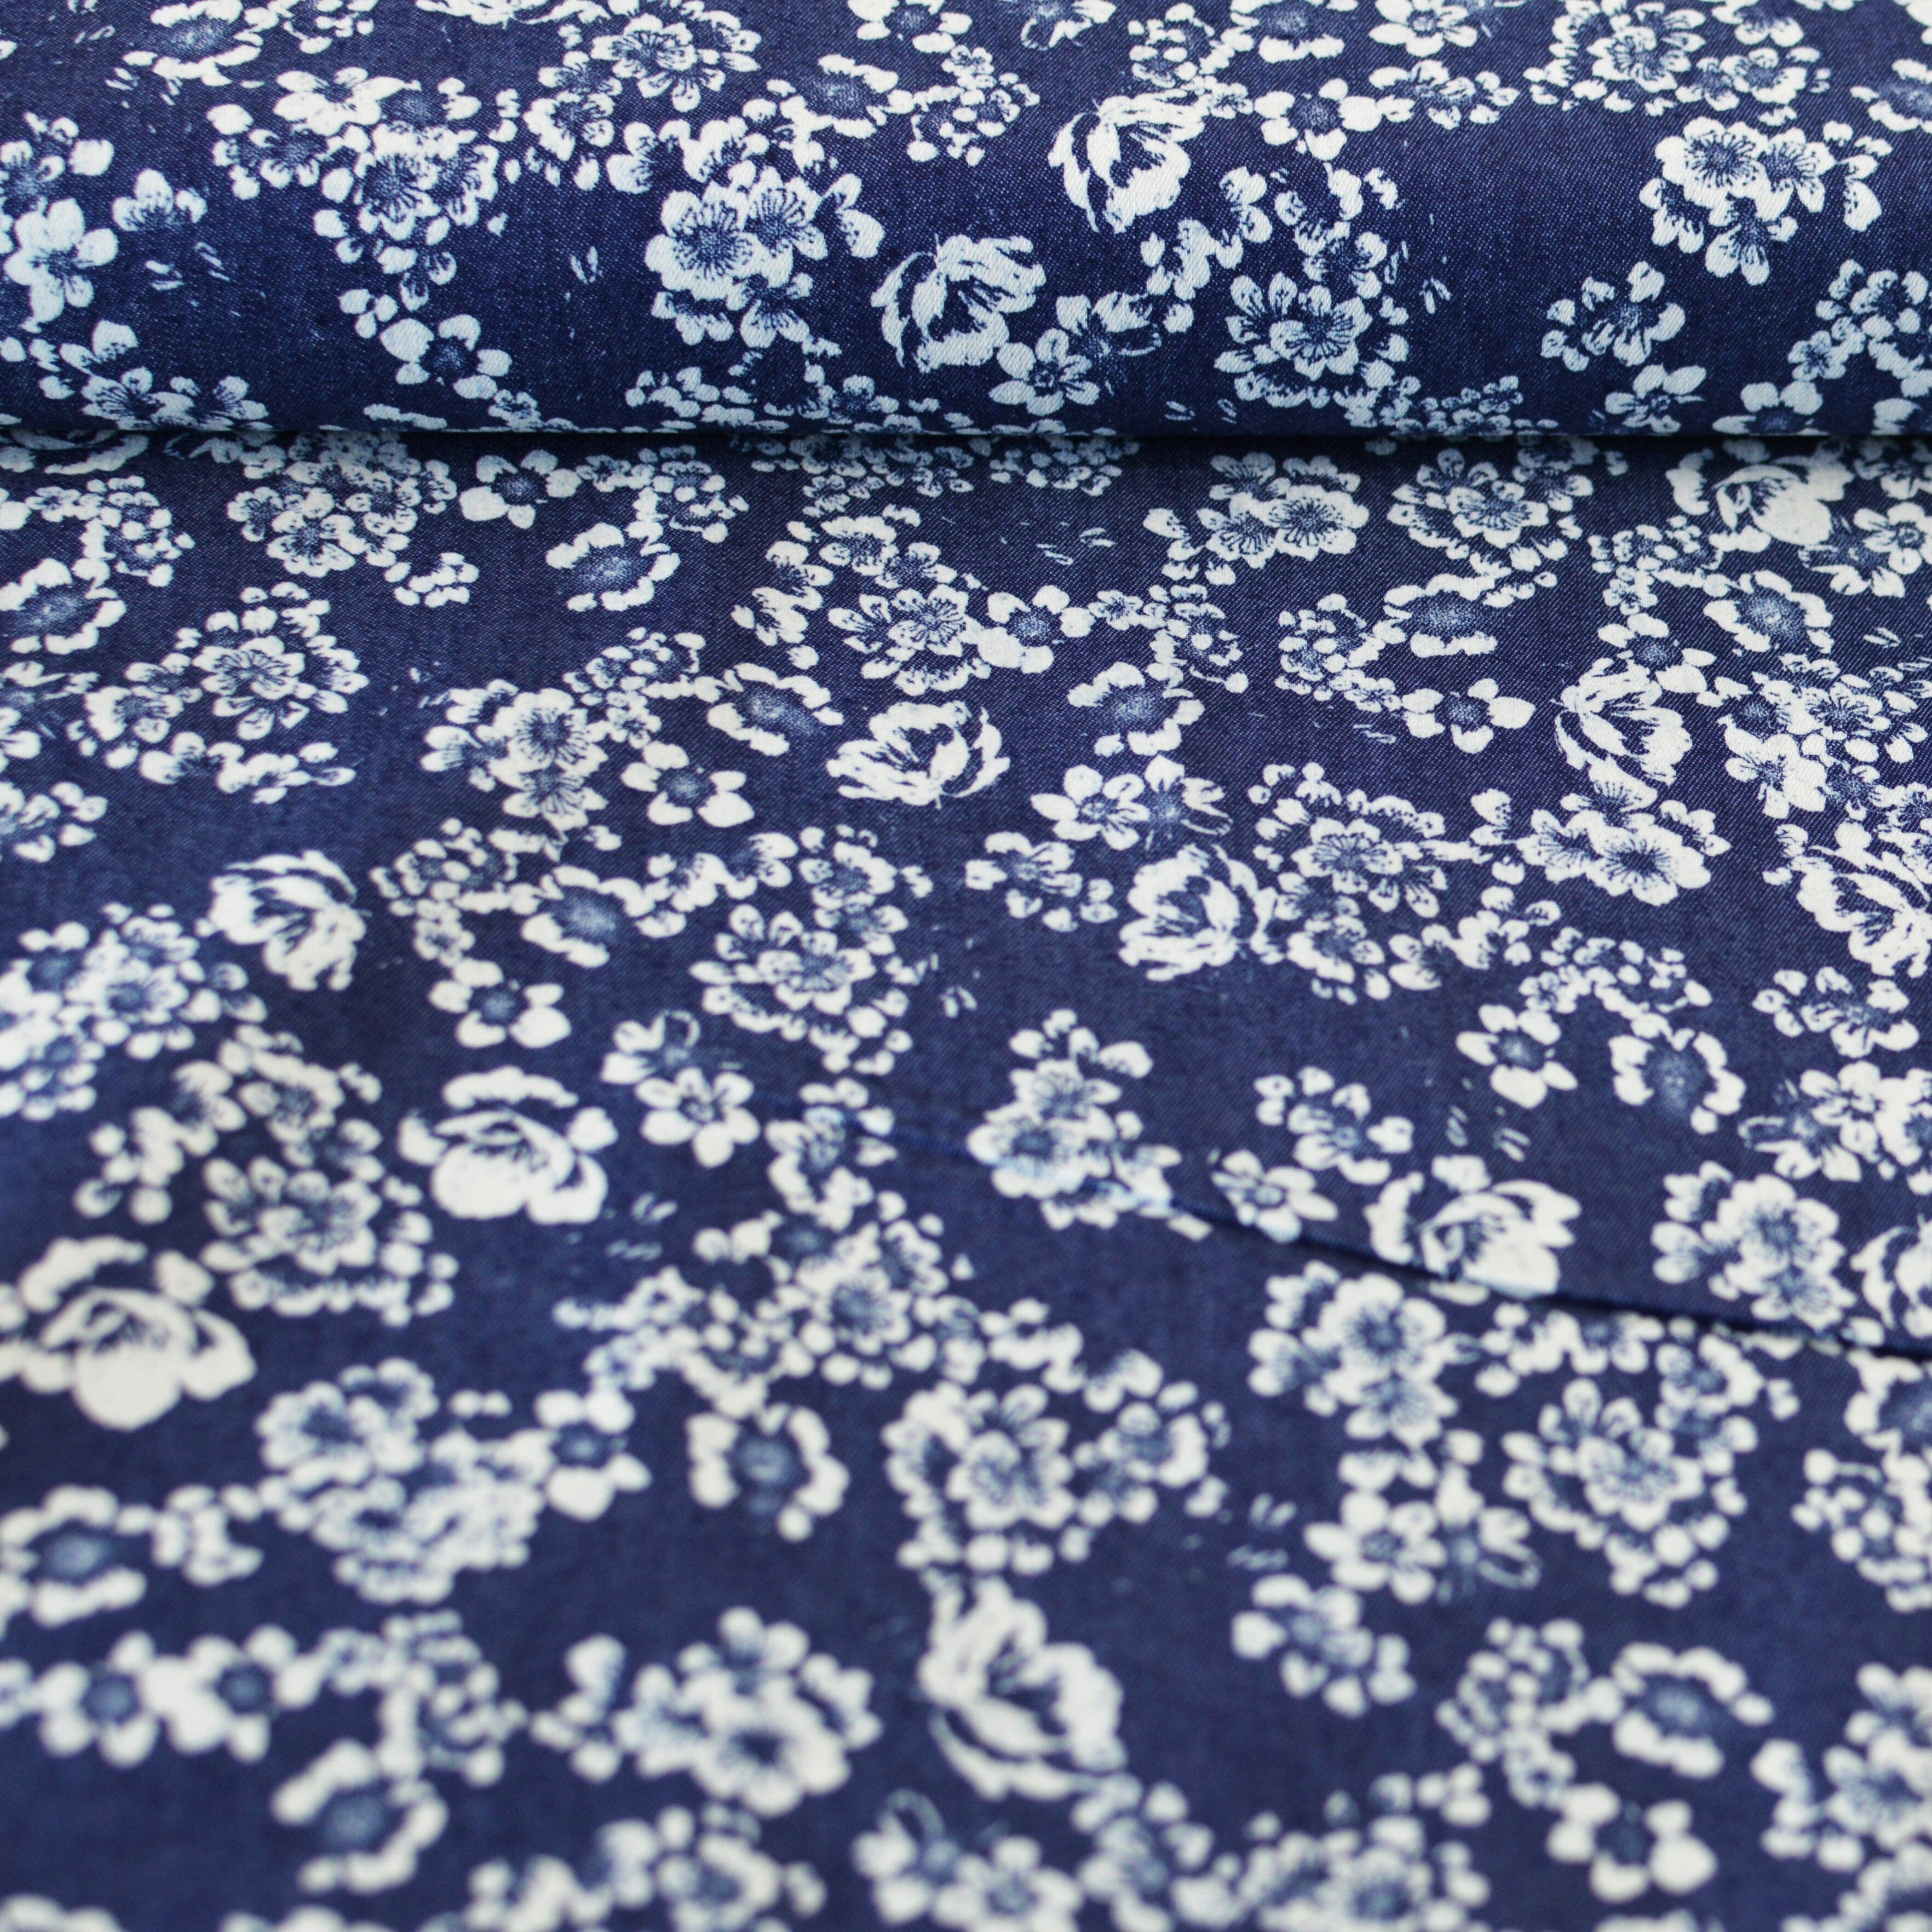 Chambray - Sea of Flowers - Indigo jeansblau mit weißen Blüten - Baumwollmix Webware Fabric poshpinks